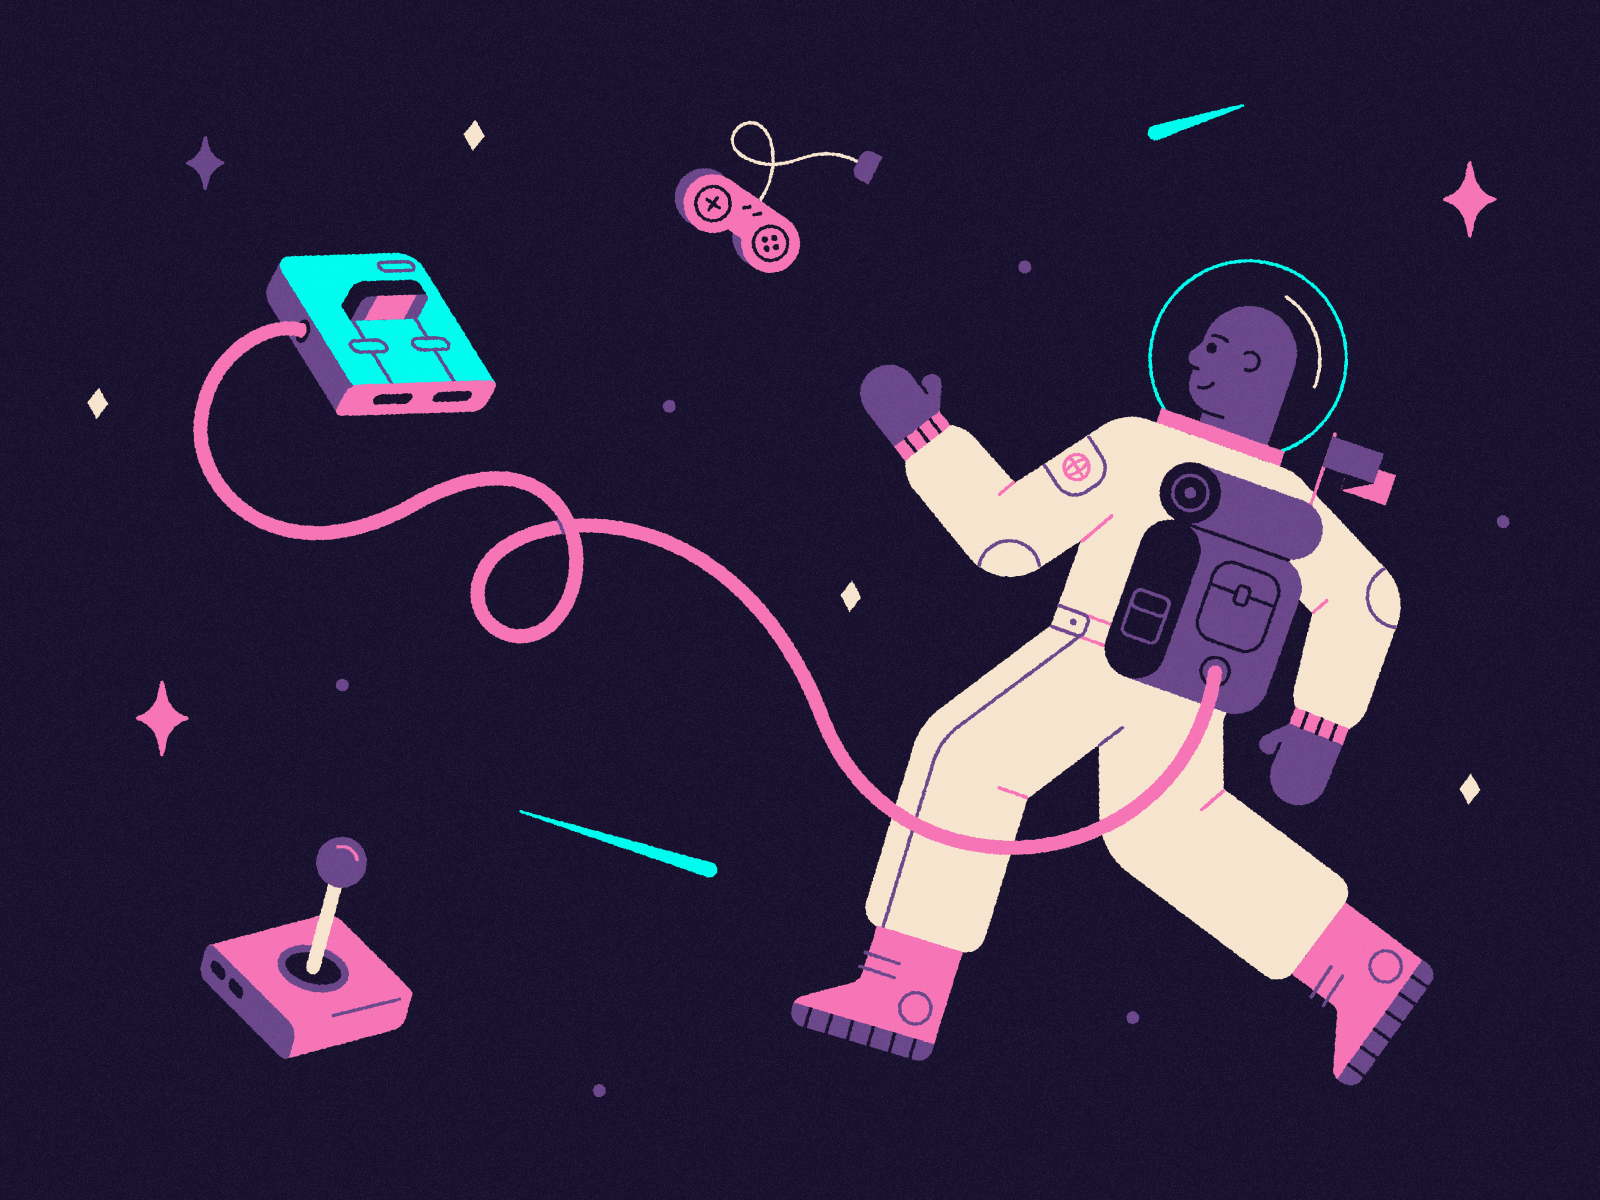 Arcade Astronaut by Jordan Jenkins